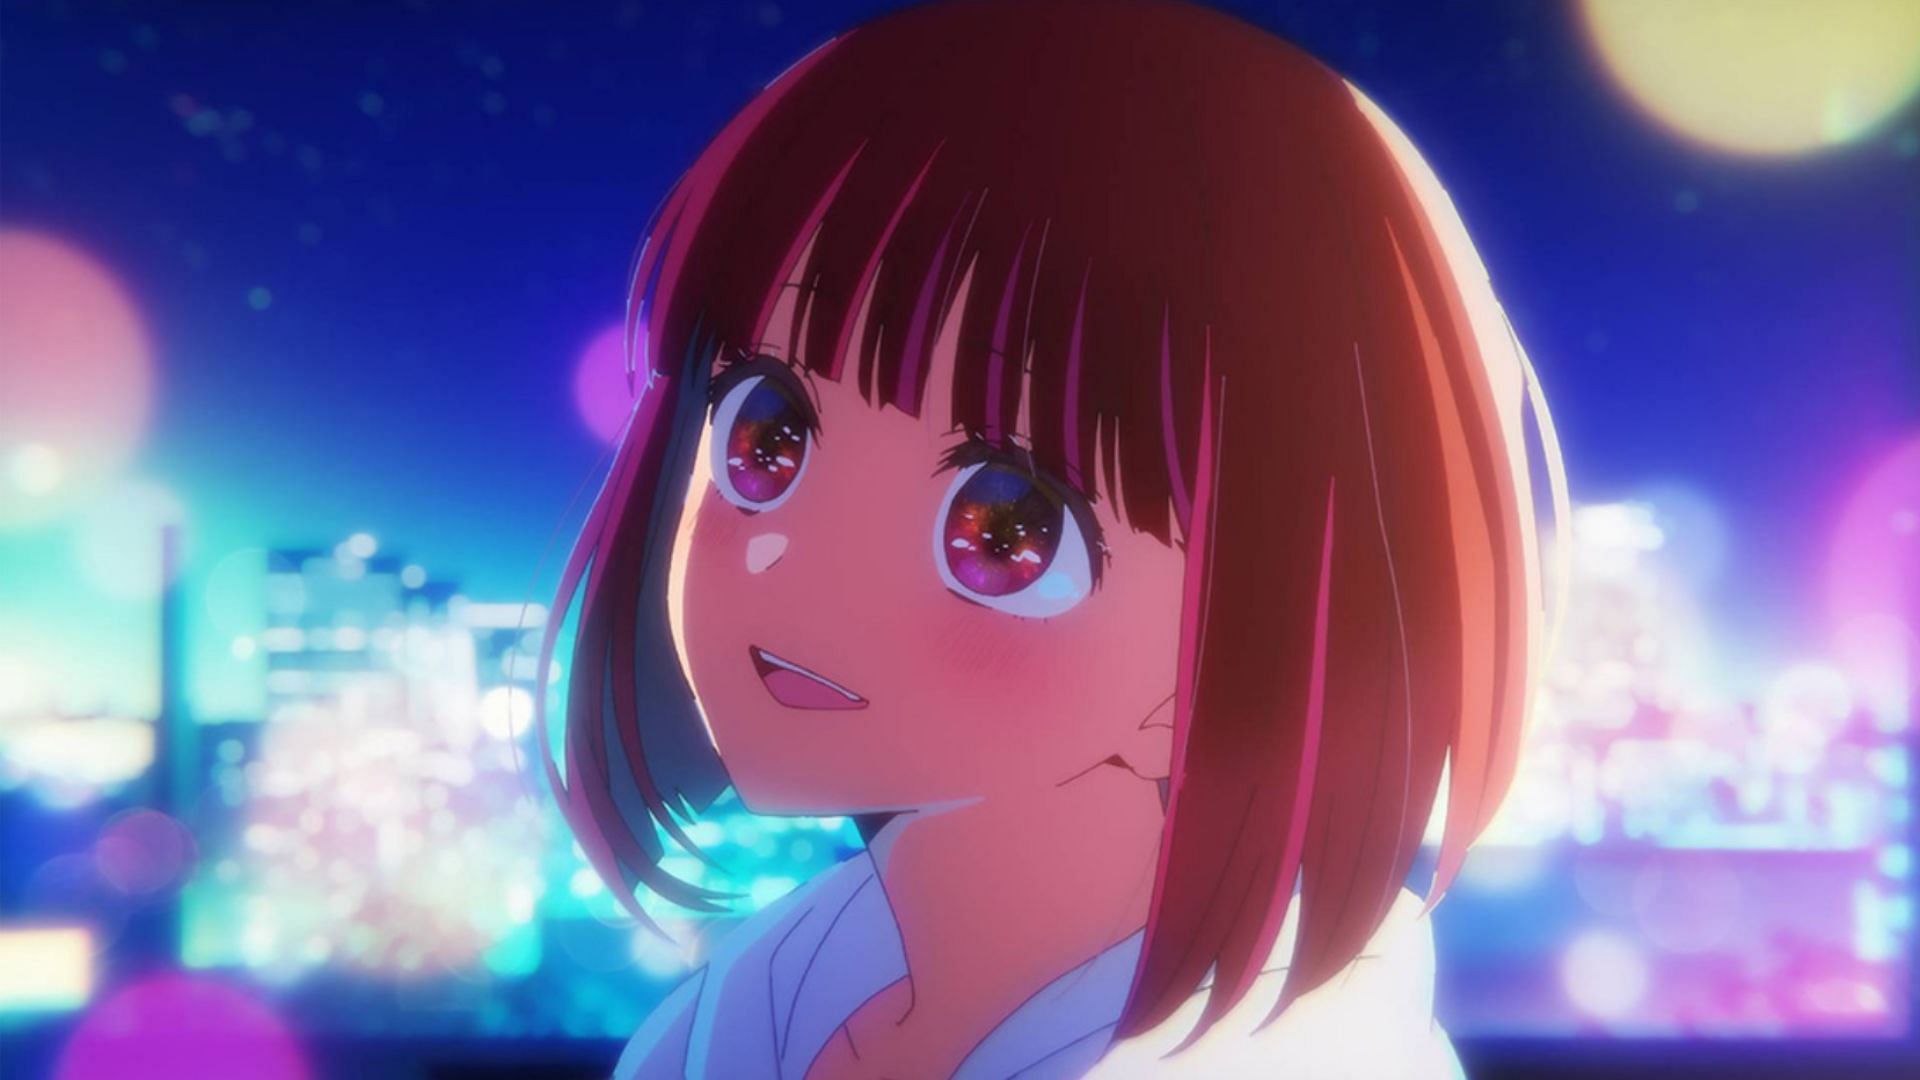 Kana Arima as seen in the anime (Image via Doga Kobo)